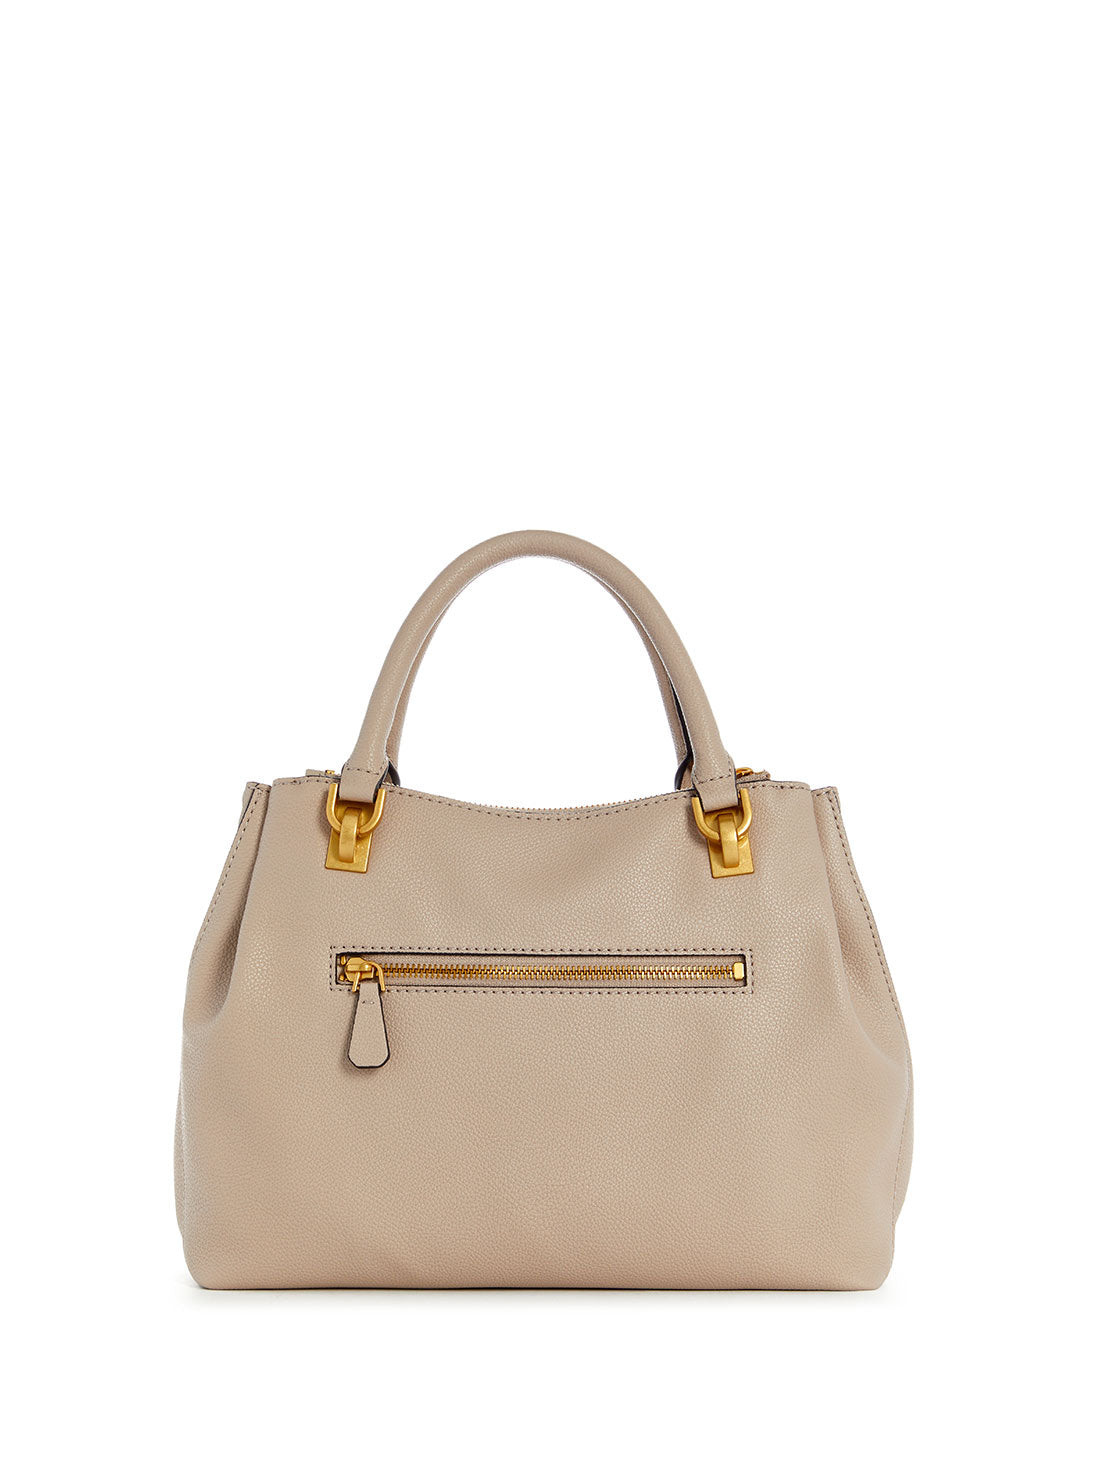 GUESS Beige Cosette Luxury Satchel Bag back view